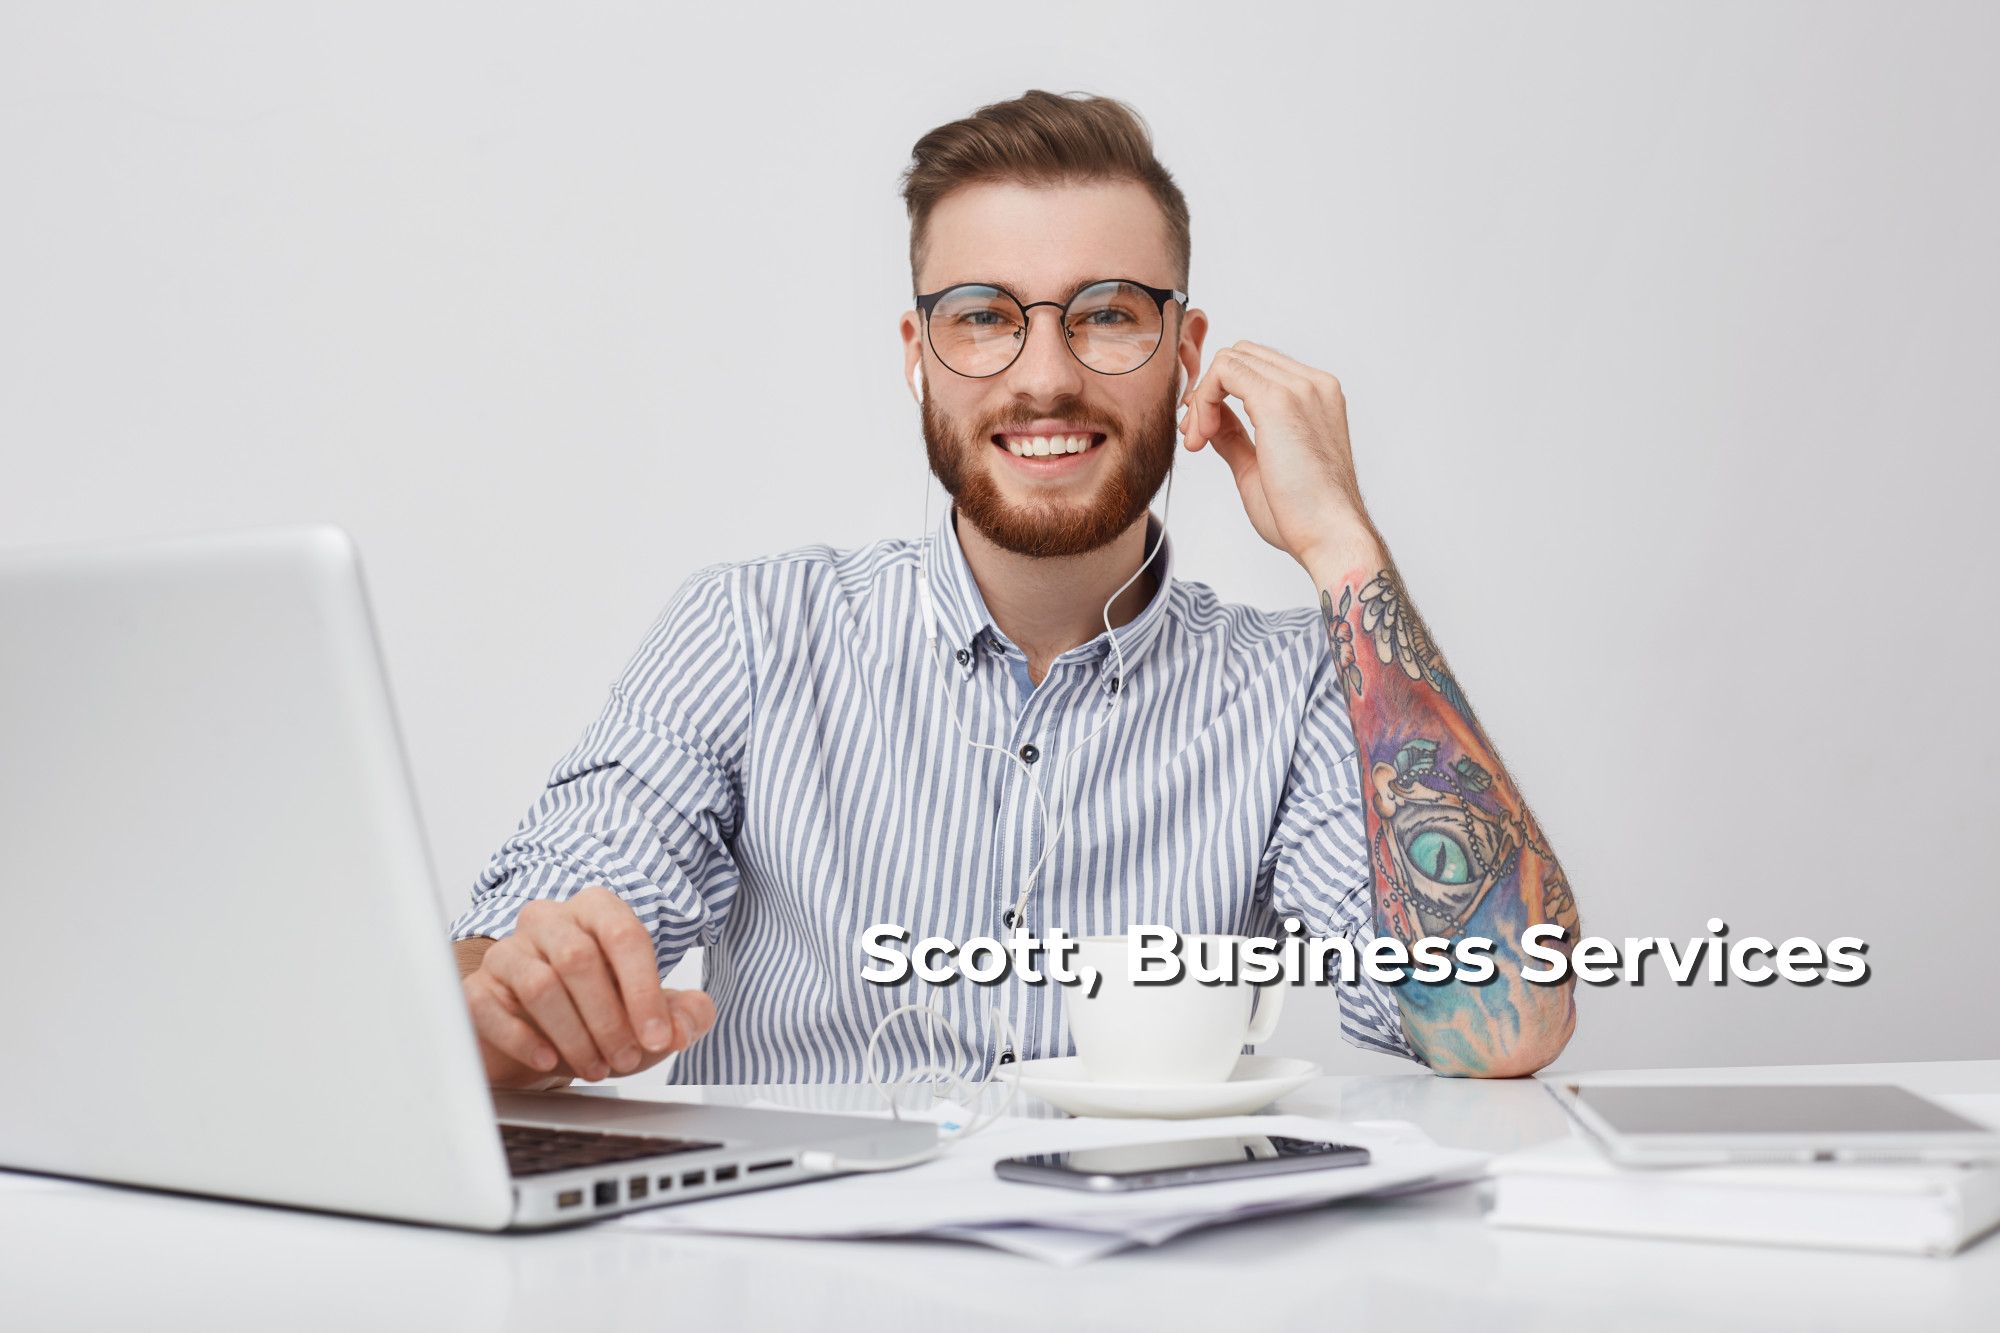 Scott, Business Services